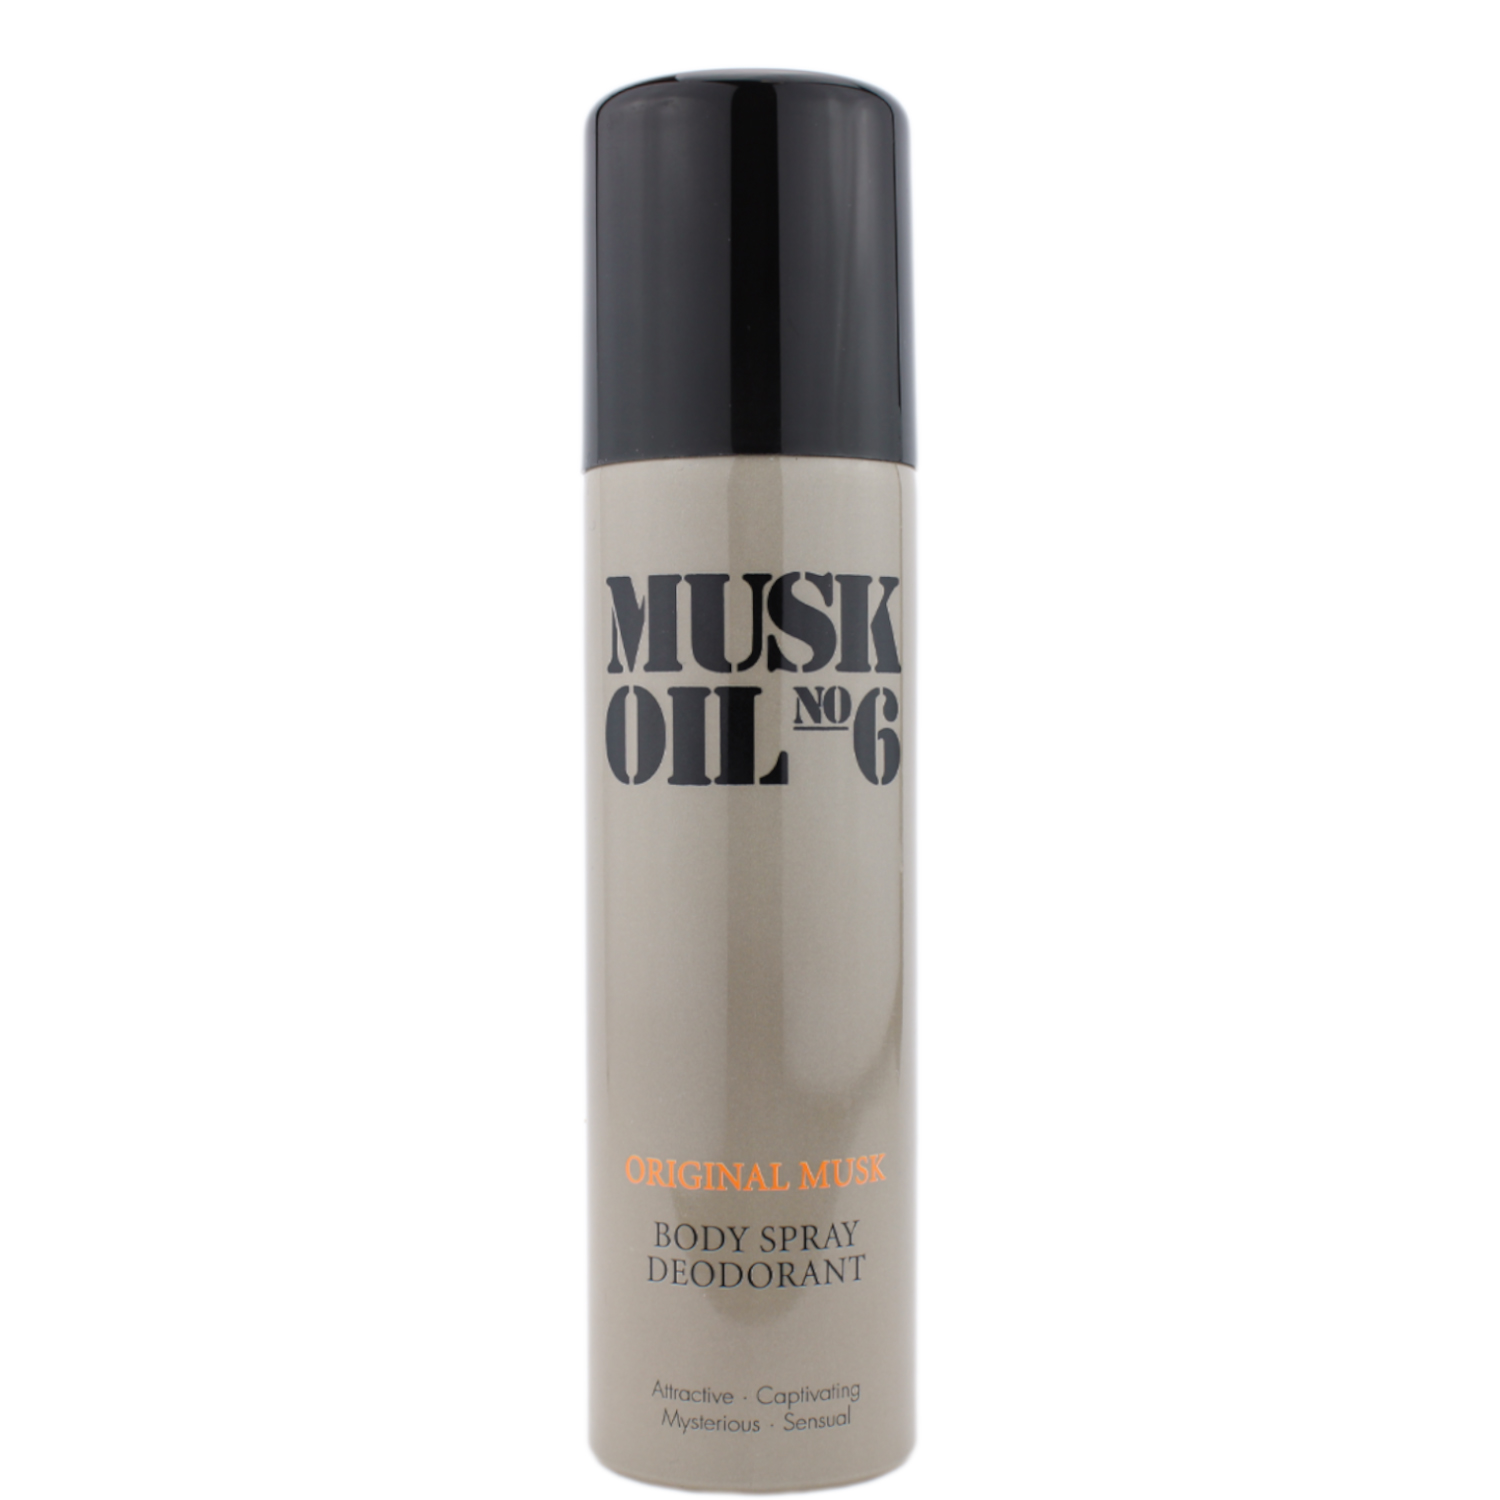 Gosh Copenhagen Musk Oil No.6 Deodorant Spray 150ml